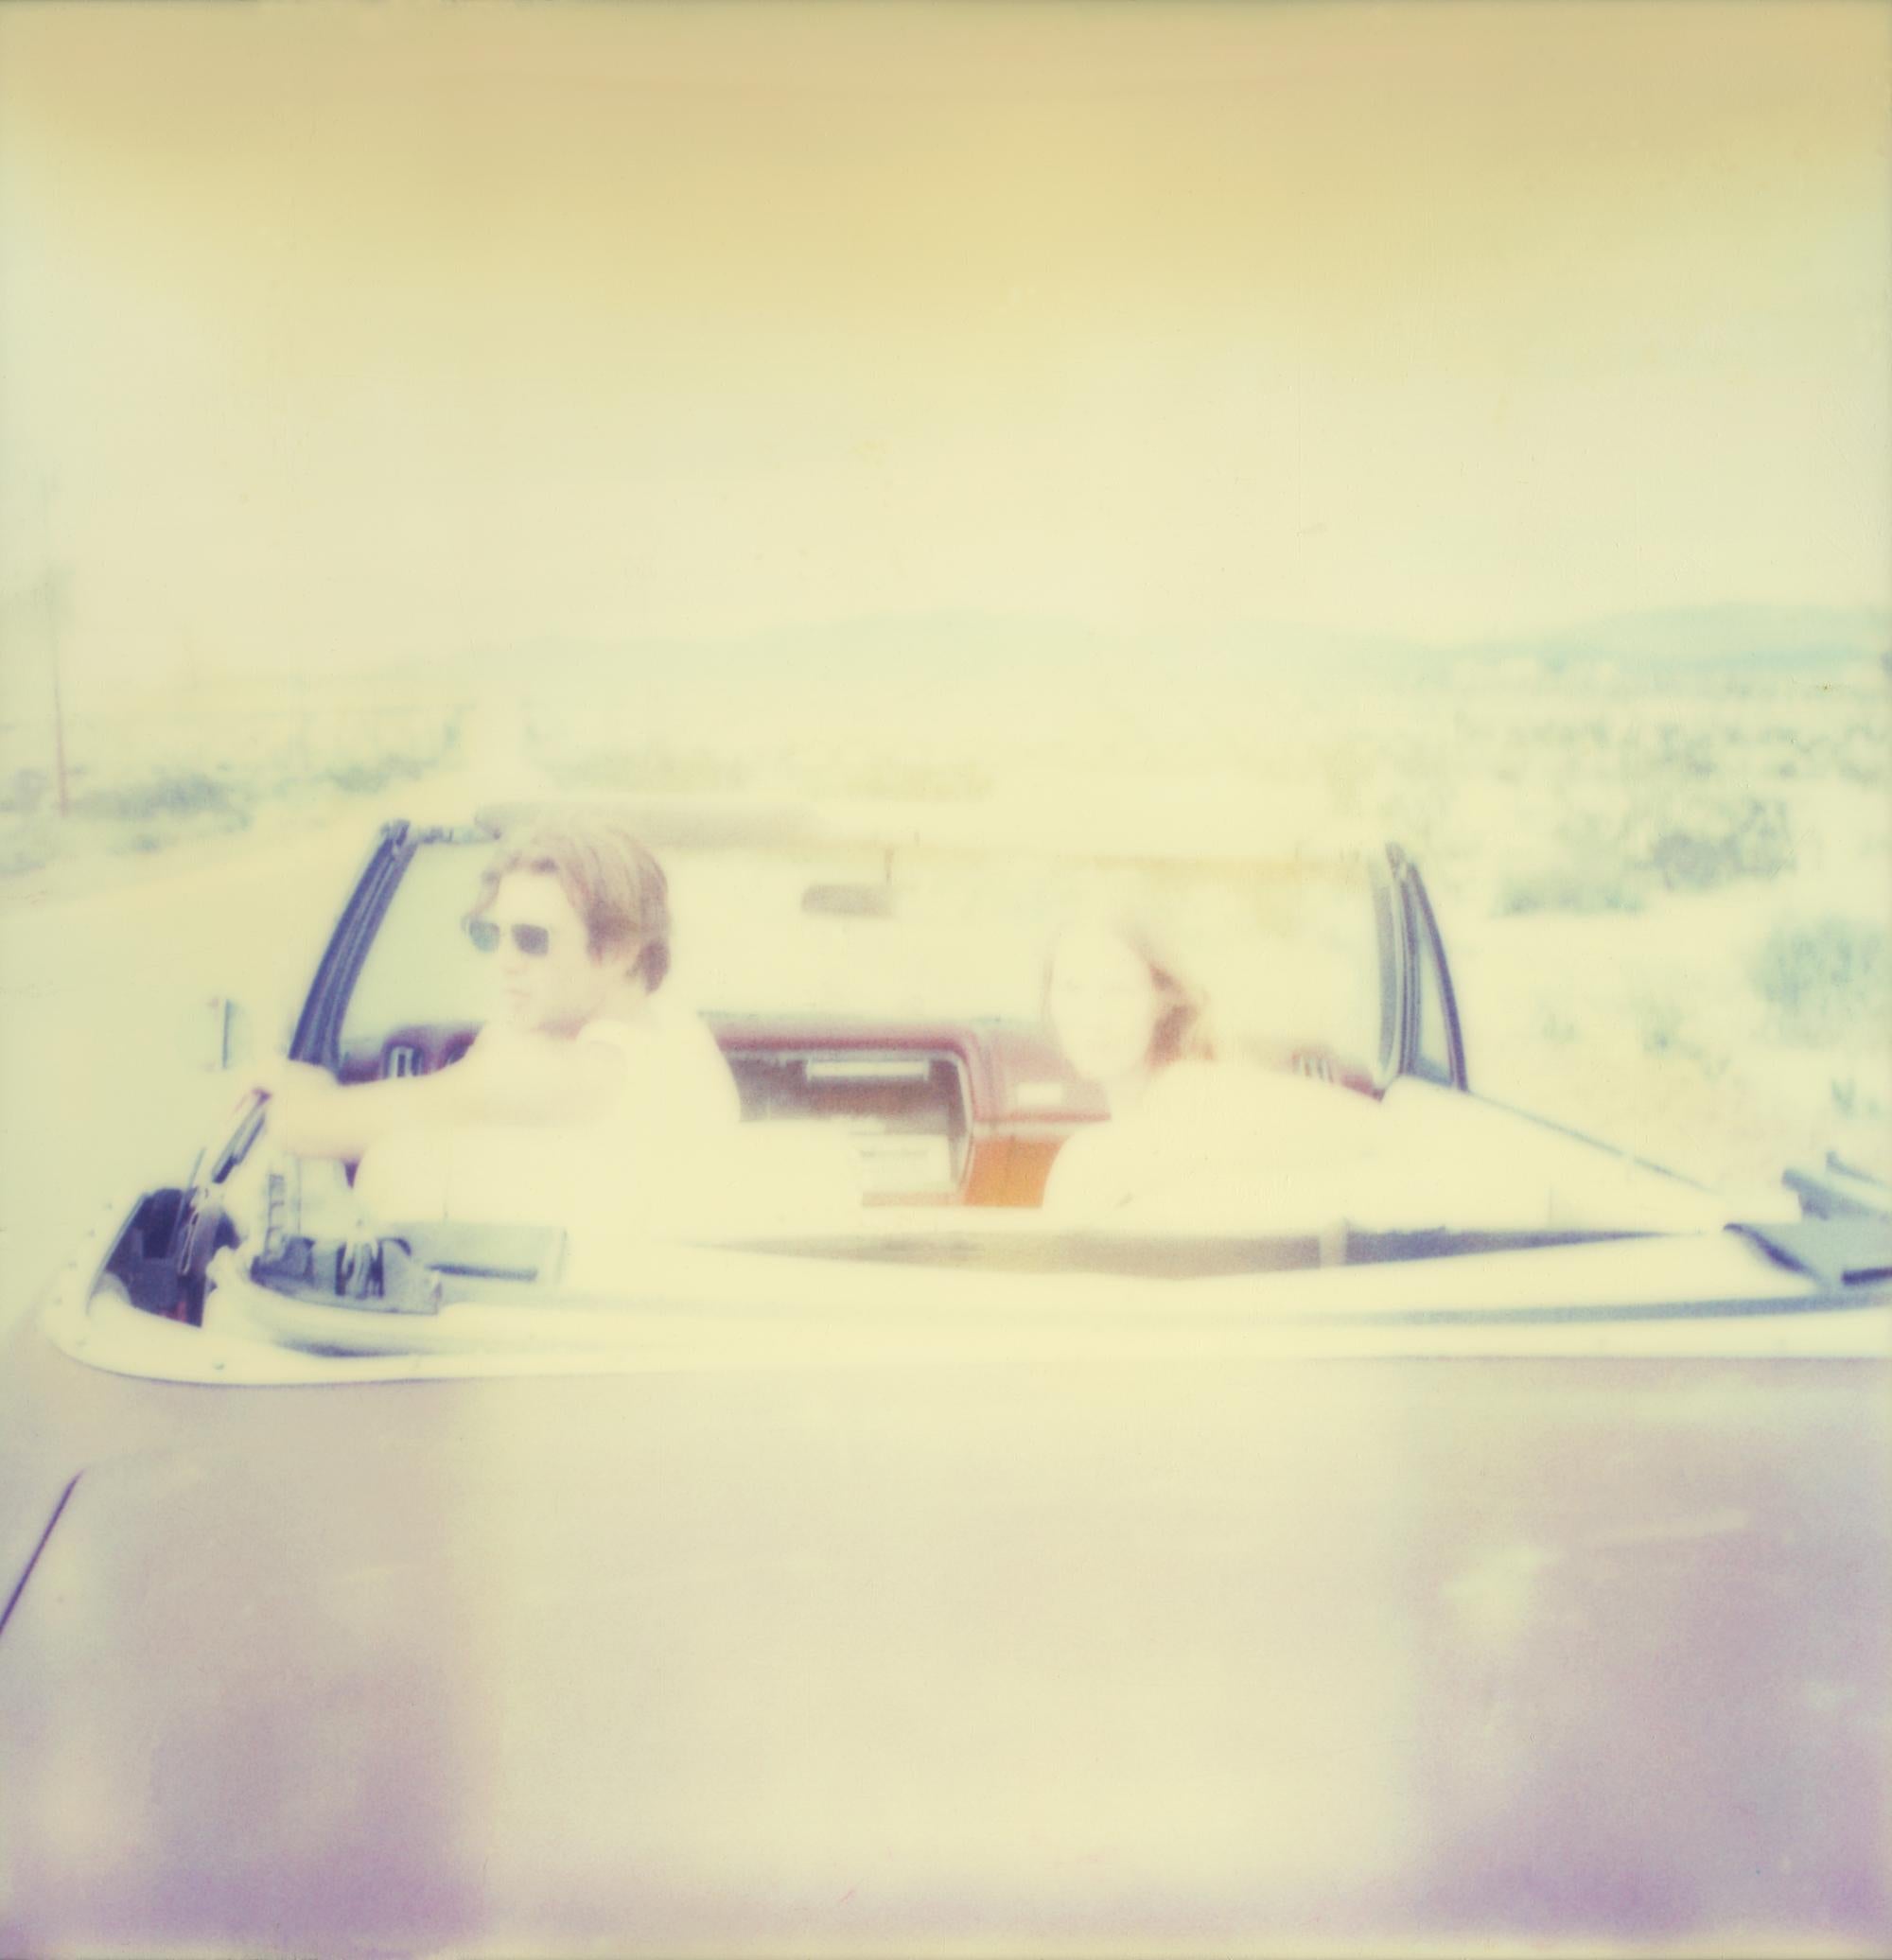 Leaving III (Sidewinder) - Polaroid, 21° secolo, Contemporaneo in vendita 2